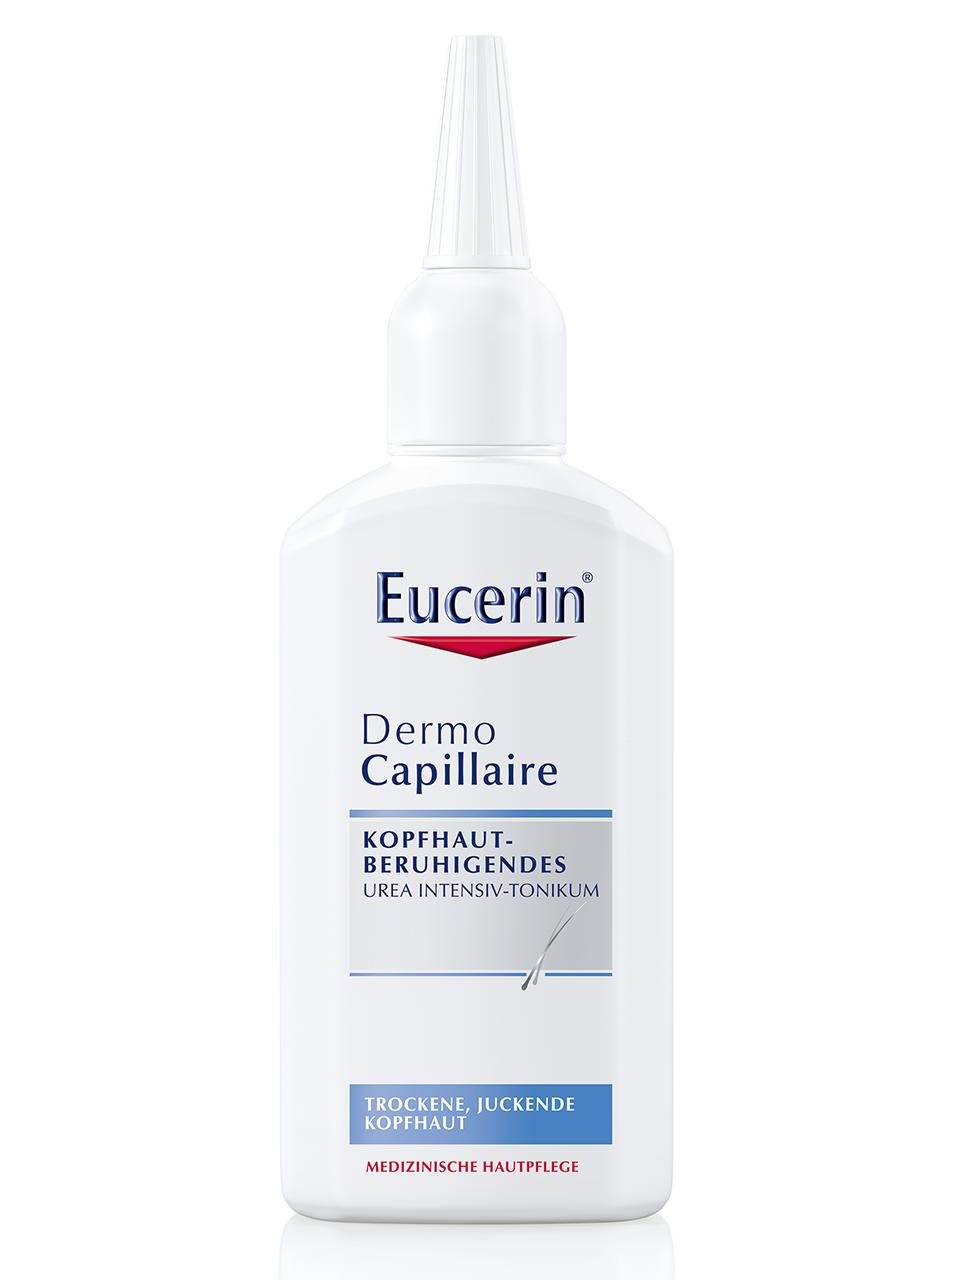 Eucerin DermoCapillaire Urea Intensiv-Tonikum Kopfhautberuhigend